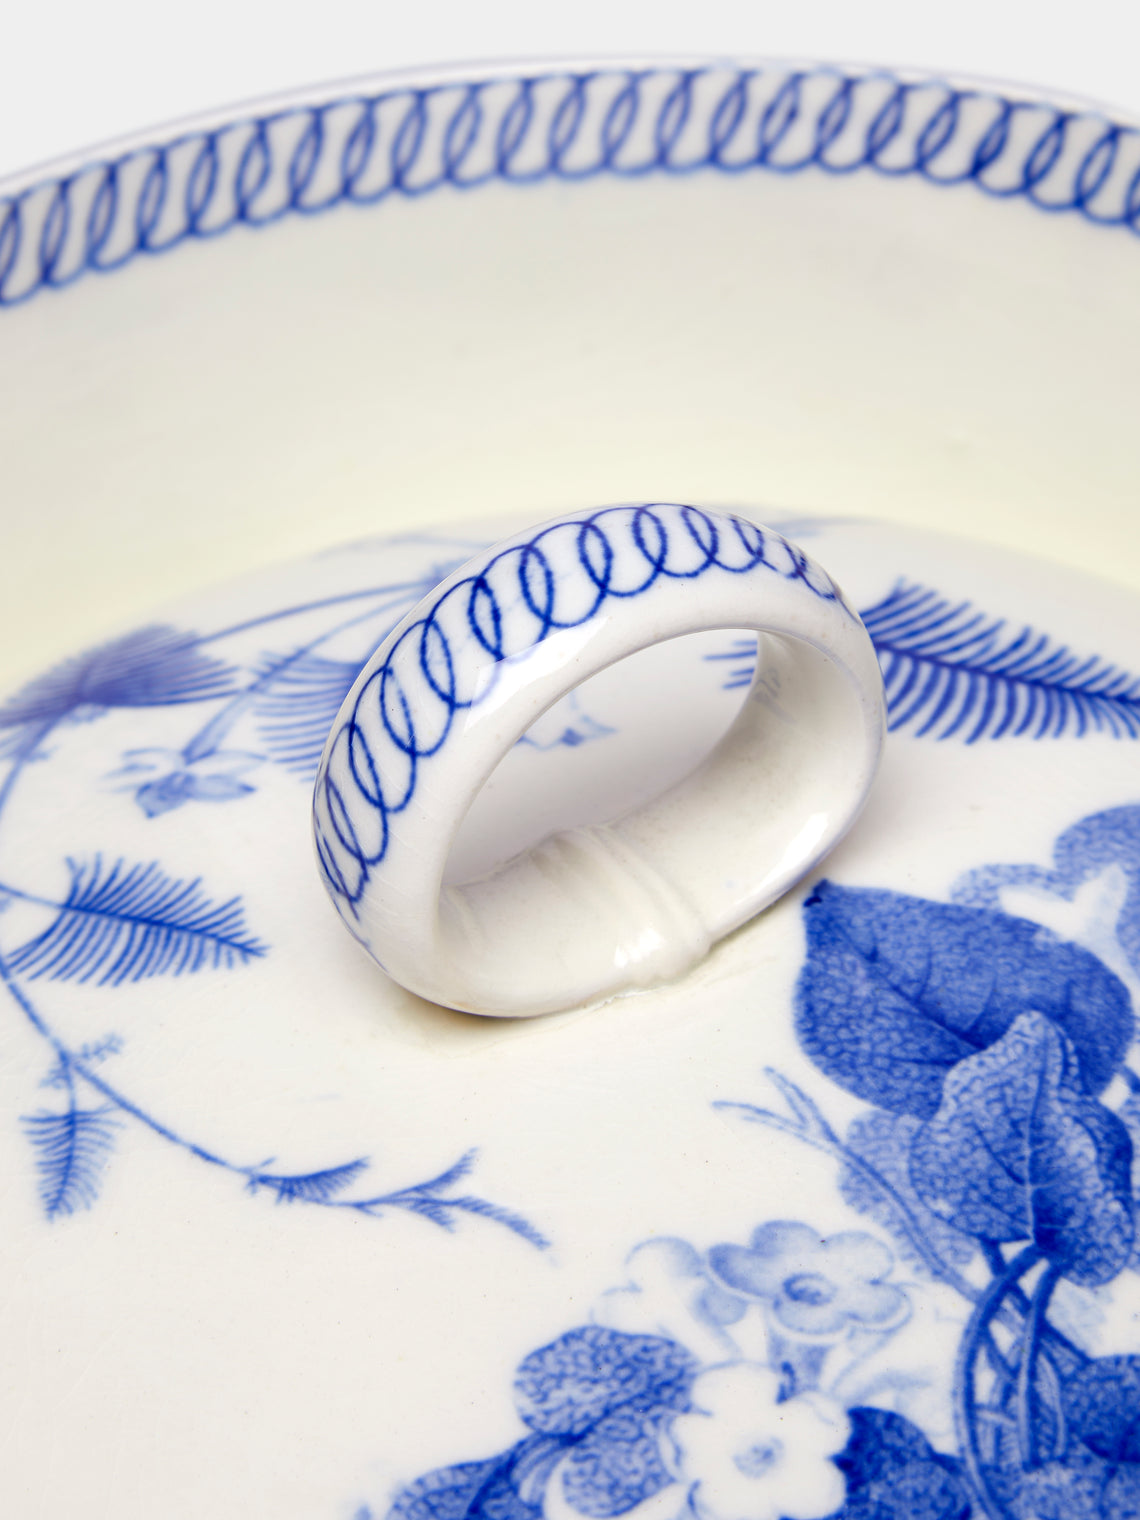 Antique and Vintage - 1805-1815 Wedgwood Ceramic Ice Pails (Set of 2) - Blue - ABASK